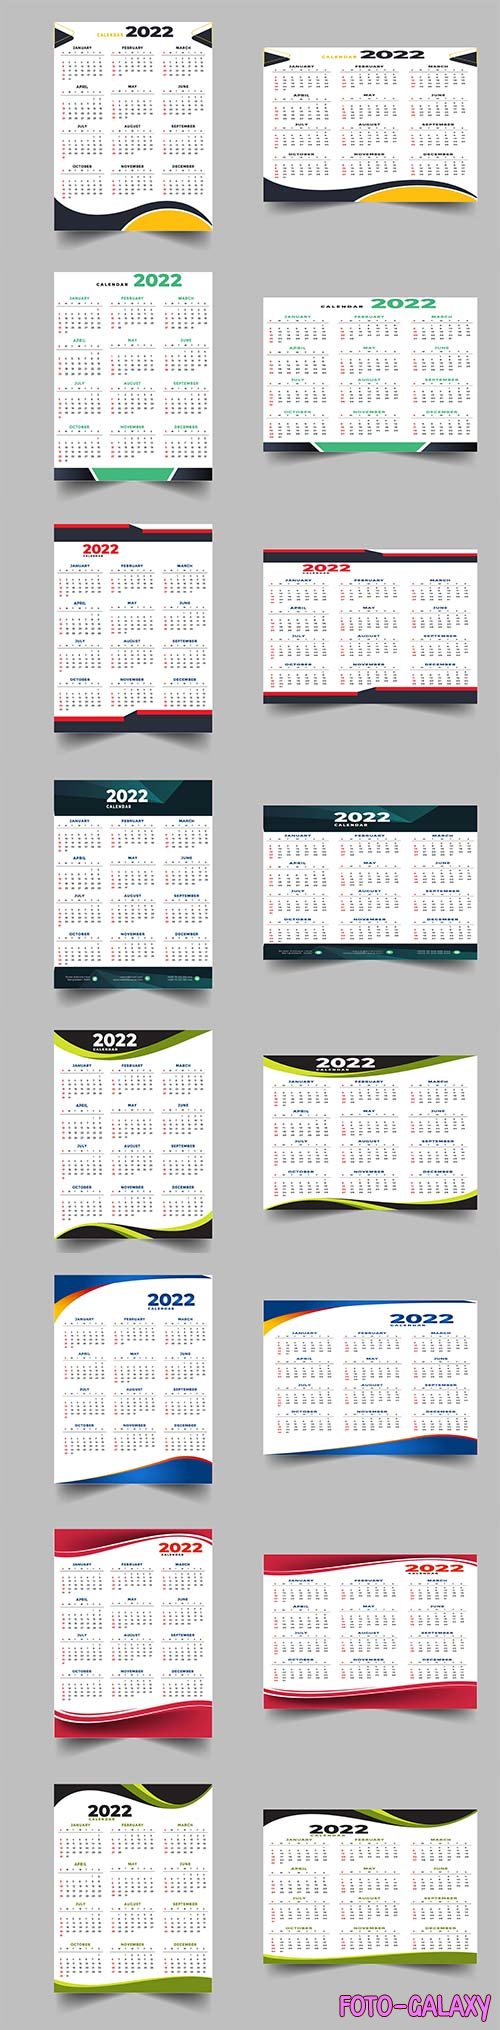 2022 calendar design template premium vector